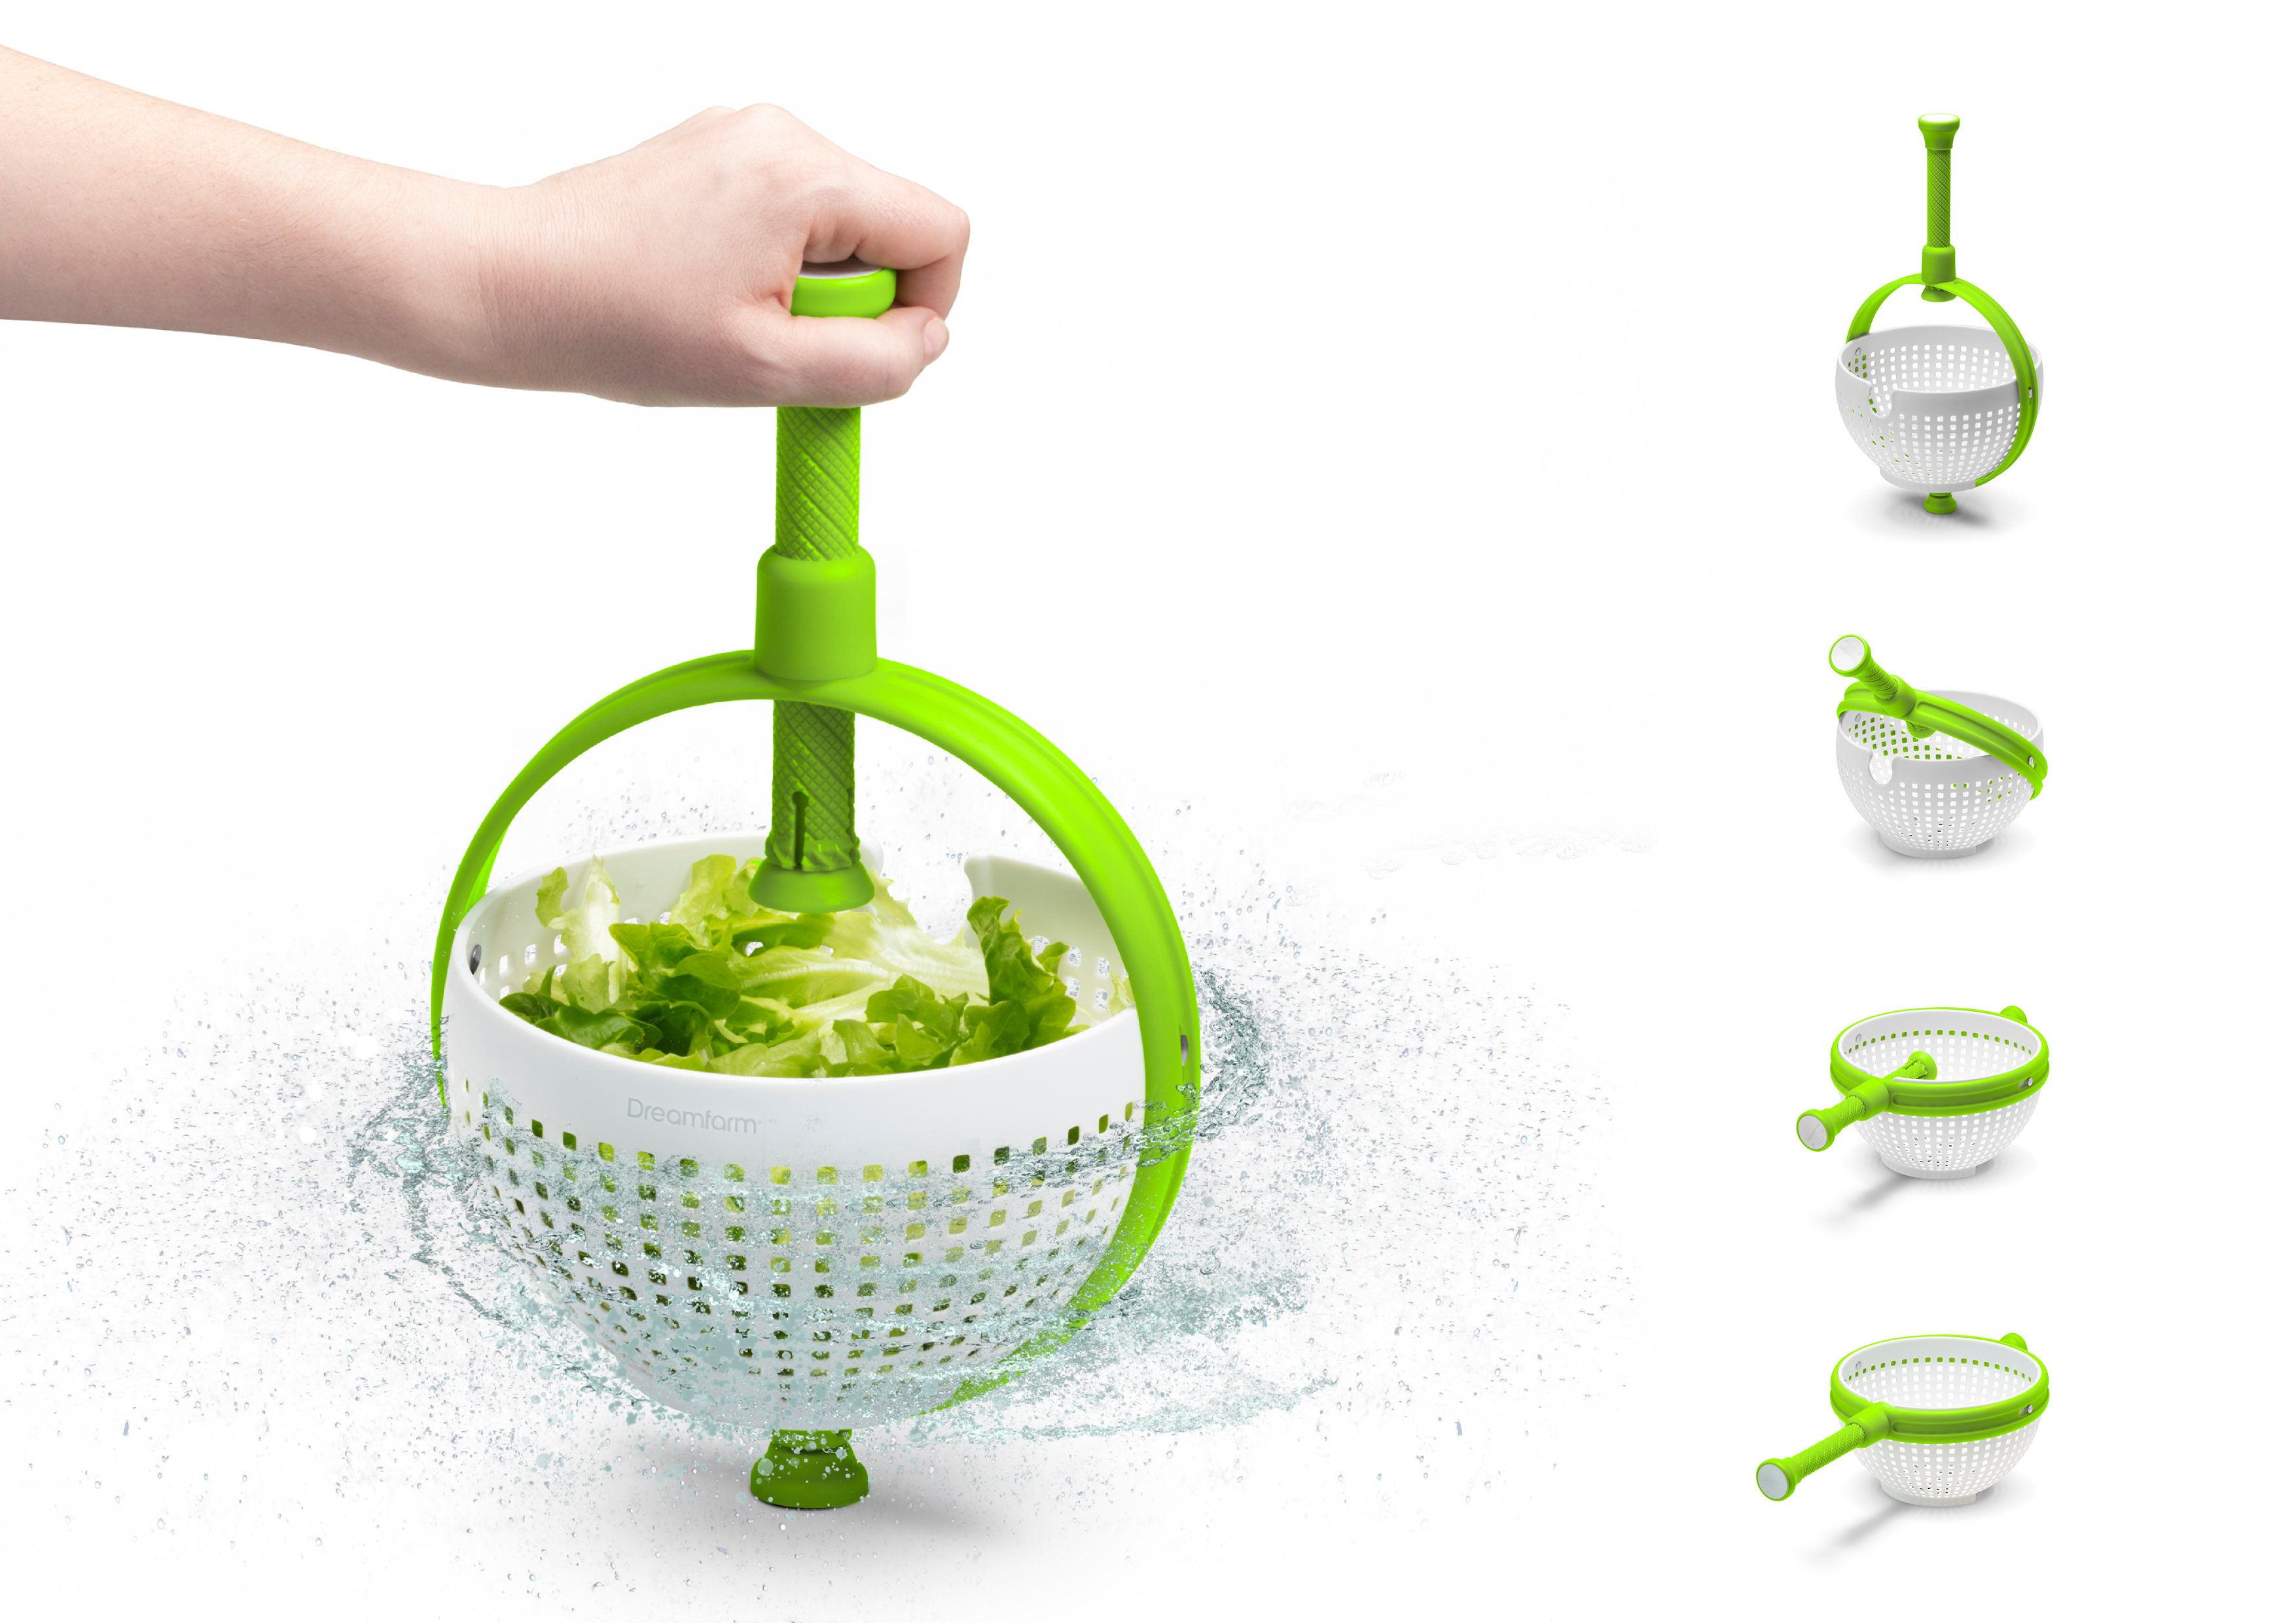 Dreamfarm 2-in-1 Foldable Salad Spinner & Colander, Stainless